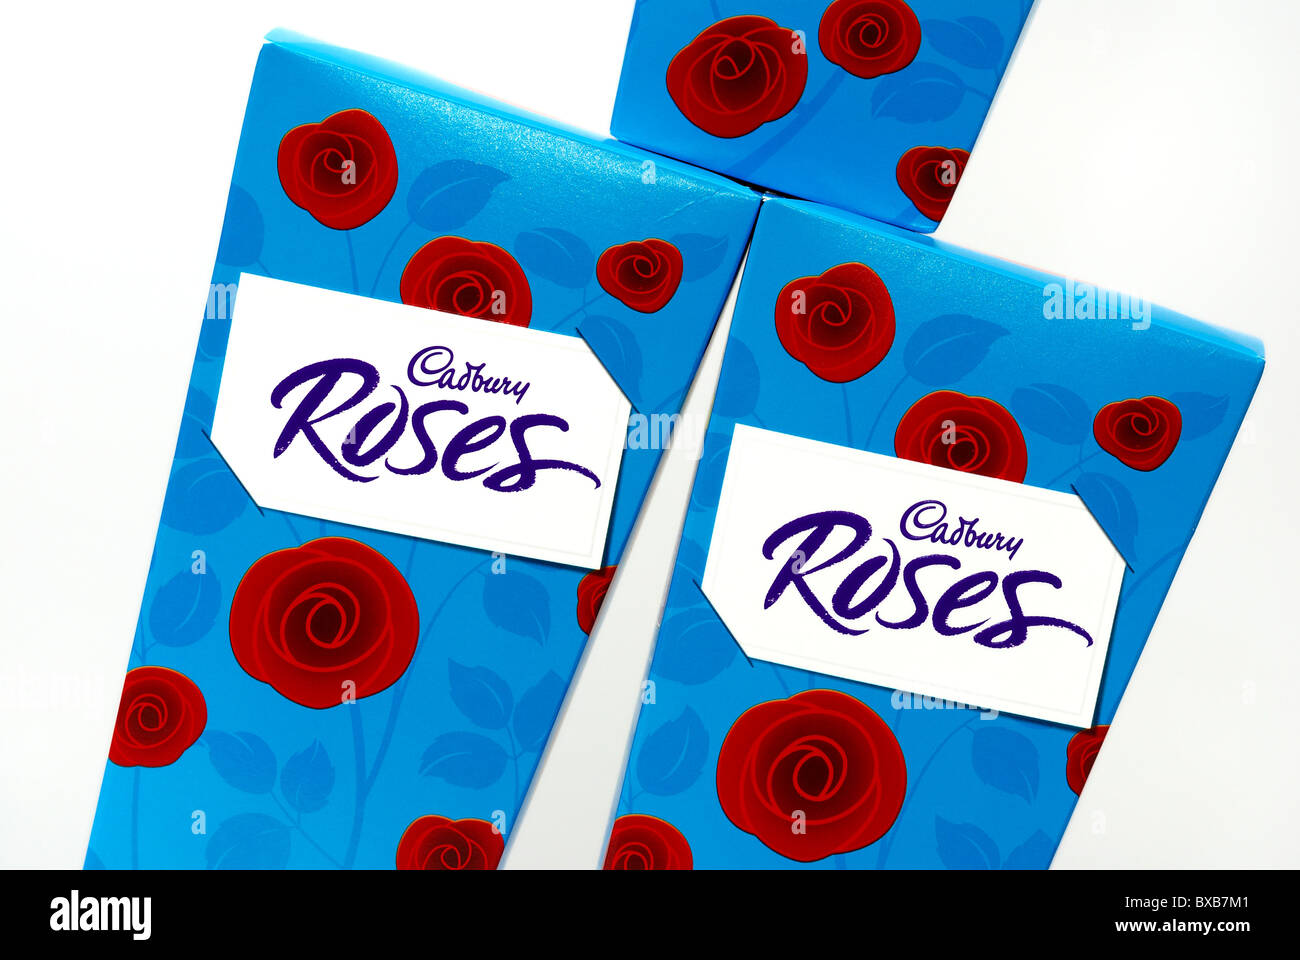 cadburys roses logo Stock Photo